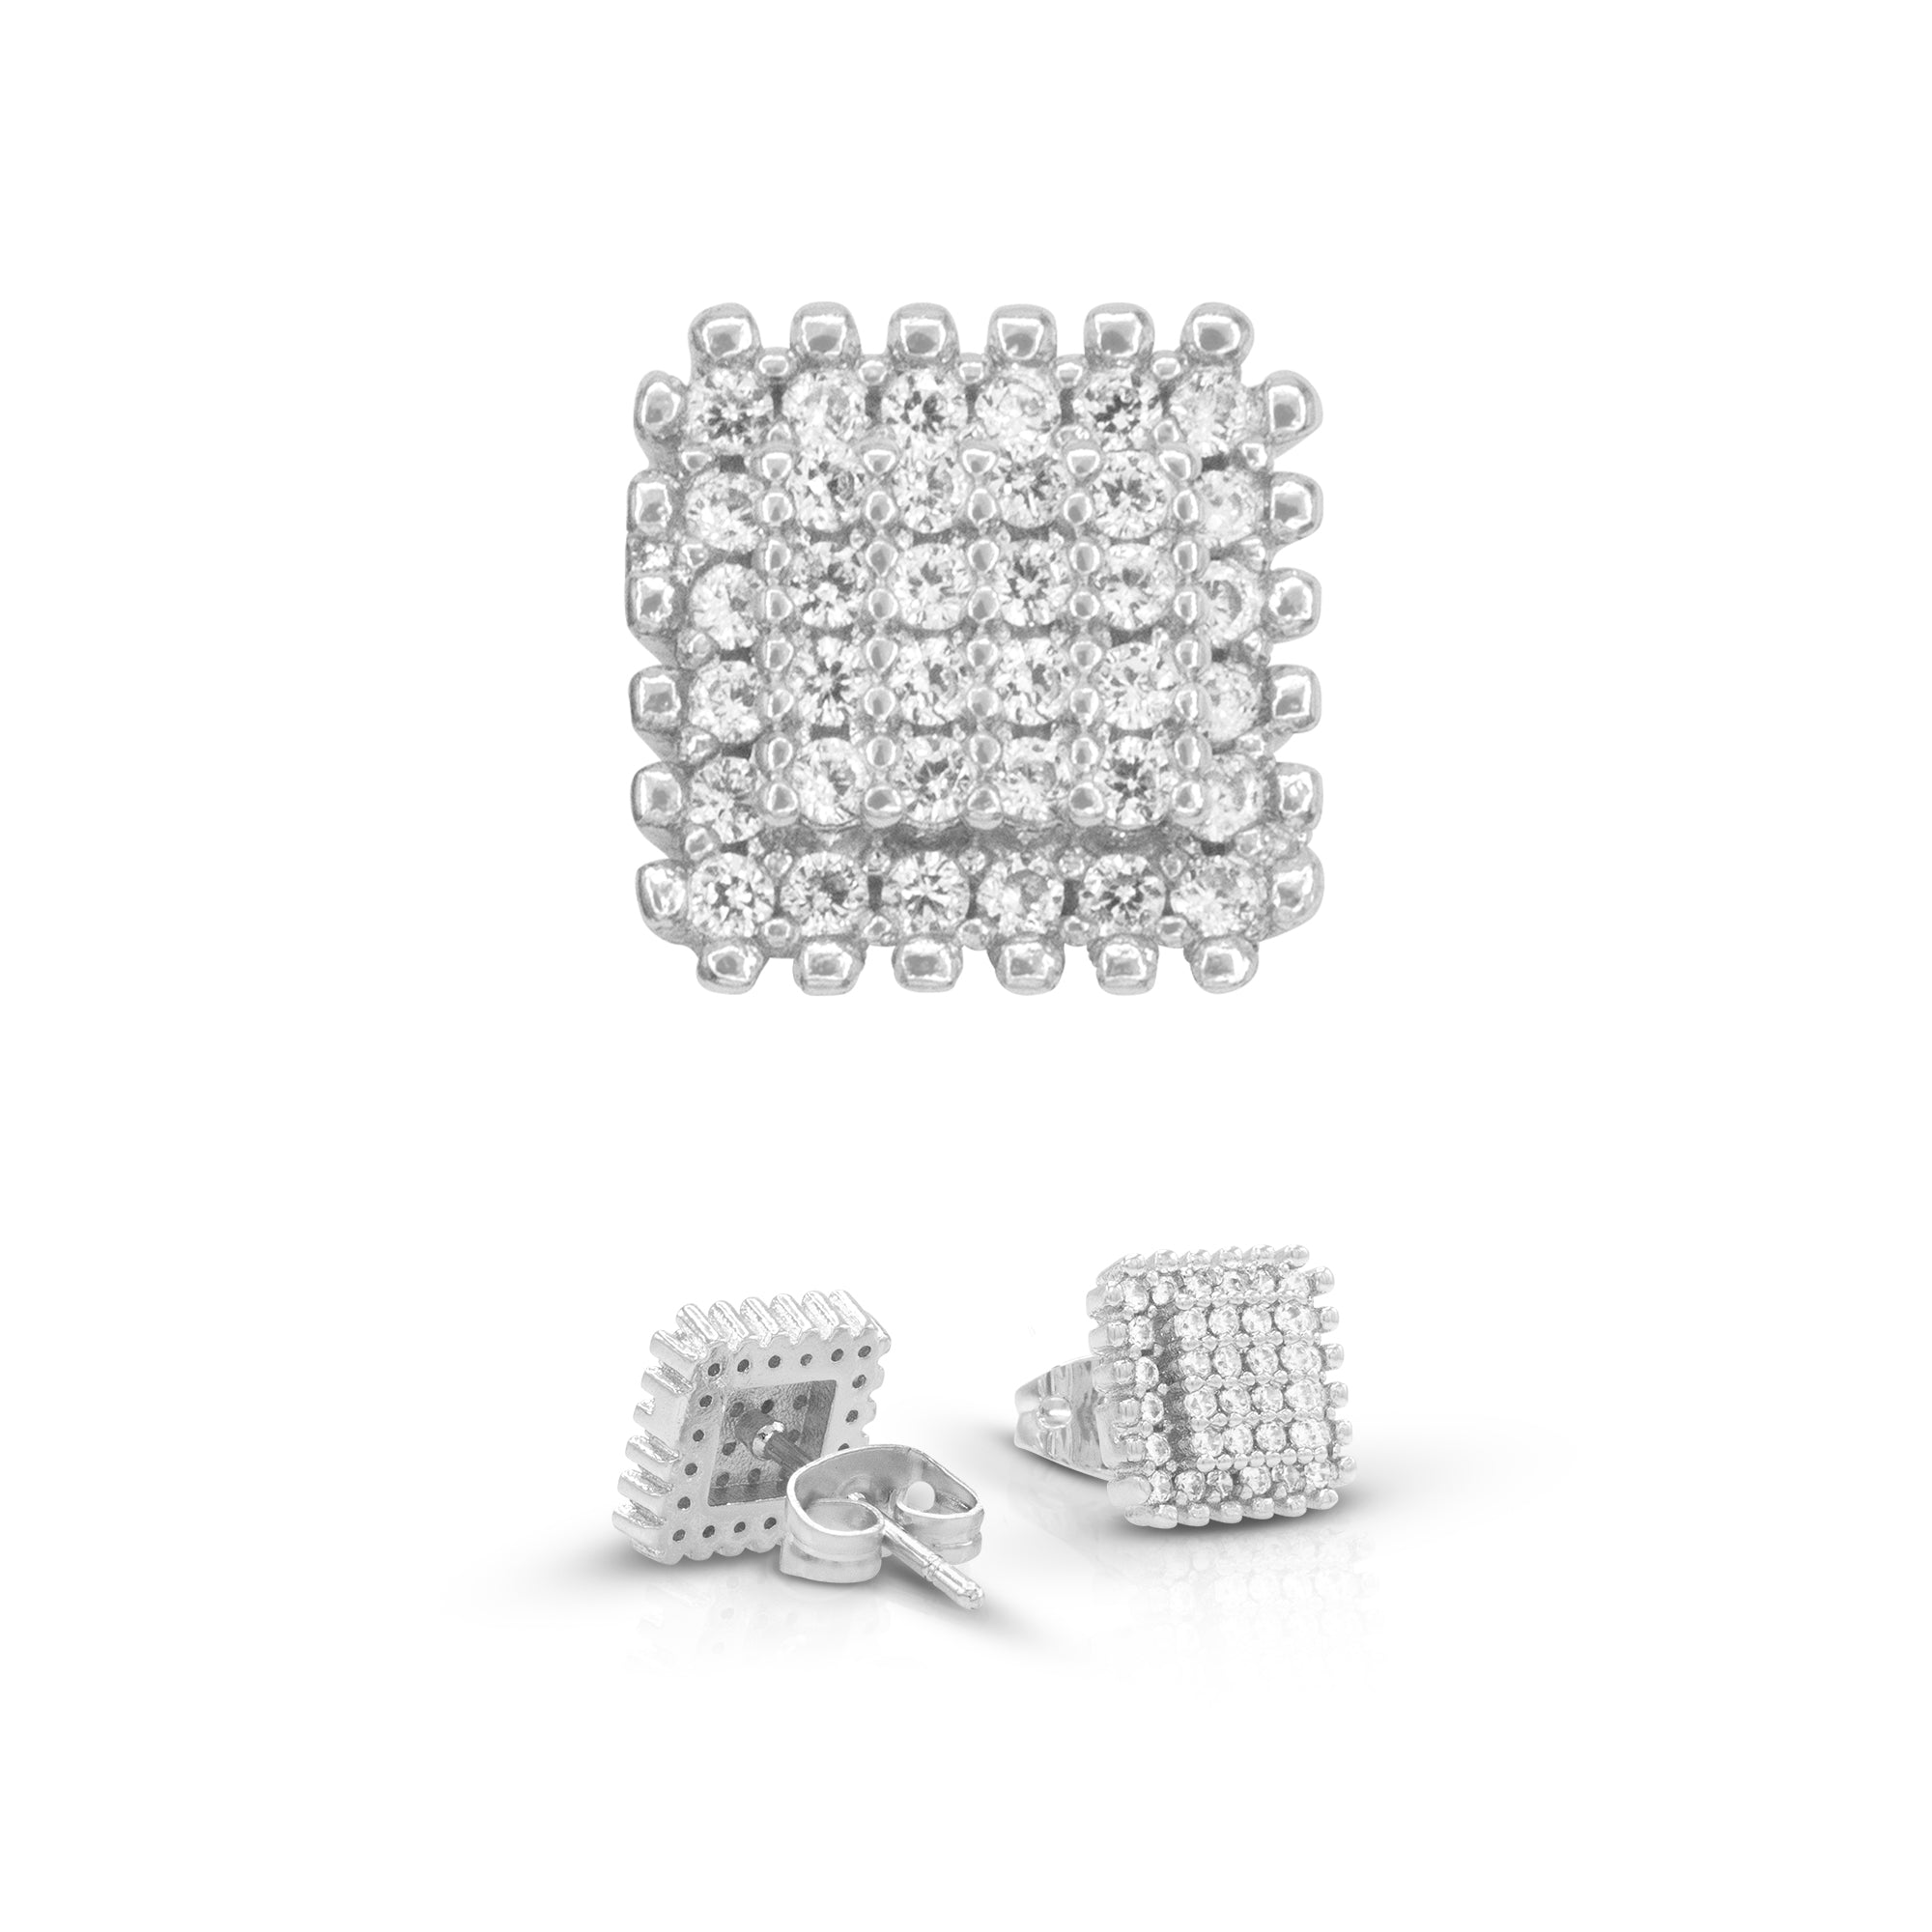 Square 2 Cubic Zirconia Earrings 14K Gold Filled Silver Hip Hop Studs Jewelry Women Men